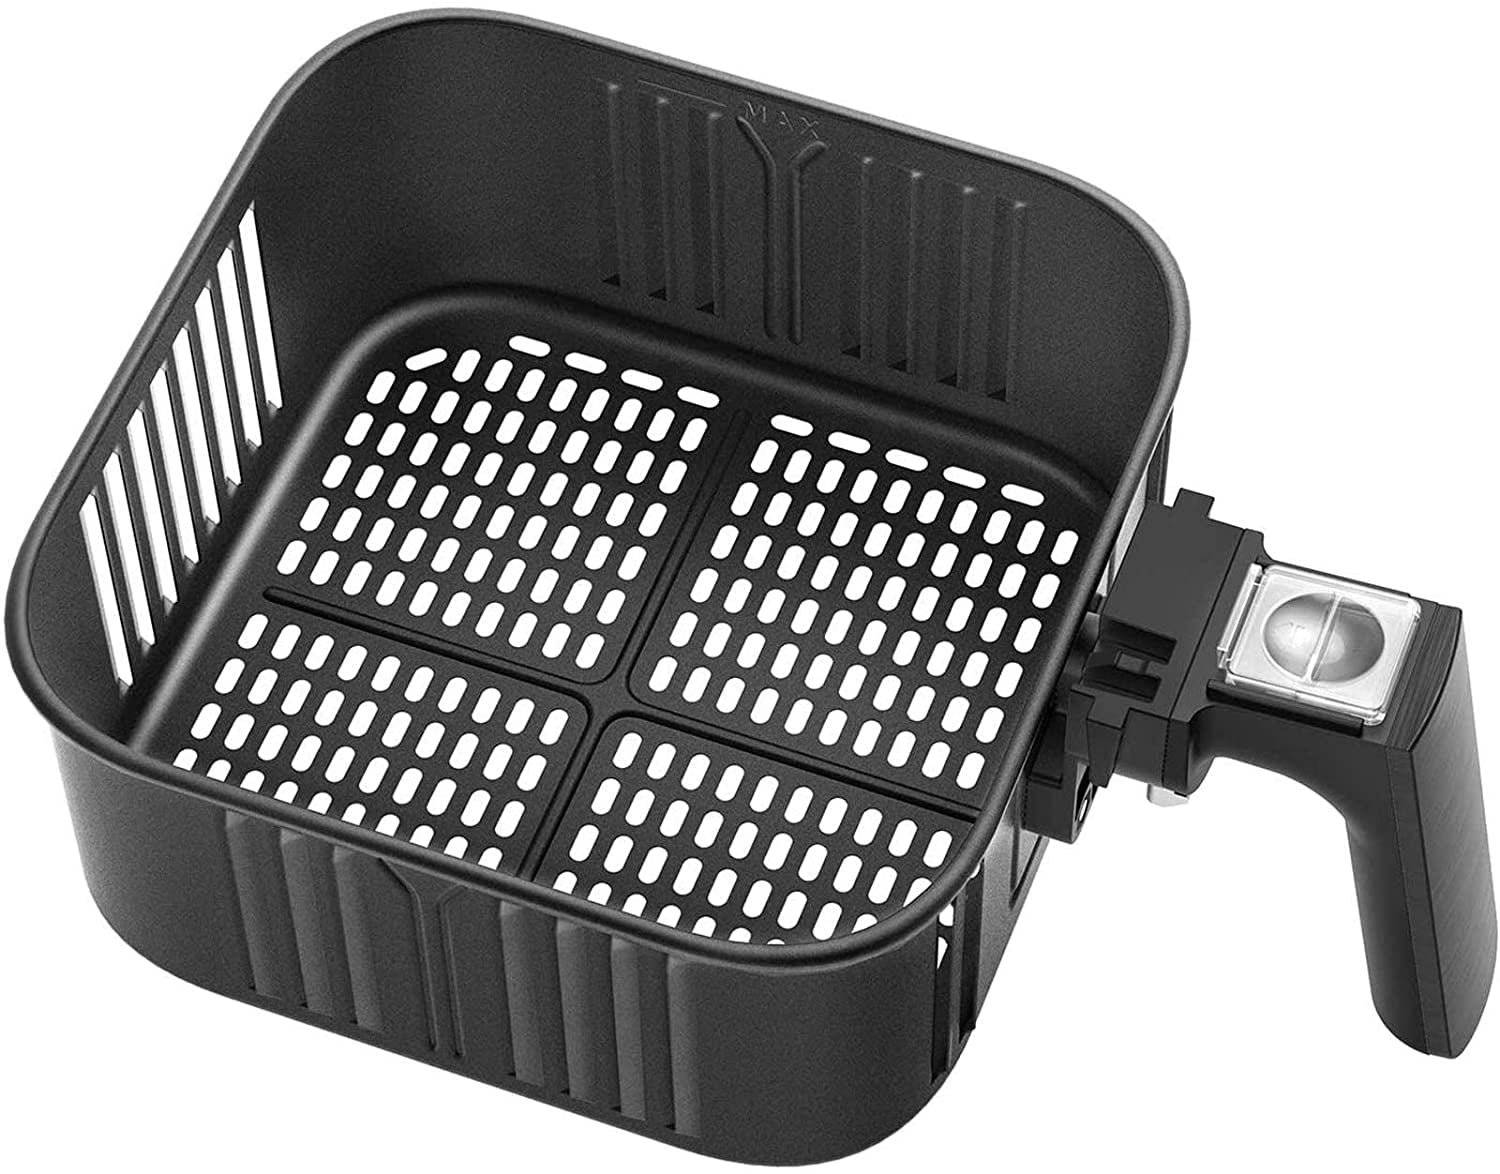 COSORI Air Fryer Replacement Basket 5.8QT For COSORI Black CP158-AF, CS158  & CO158 Air Fryers, NOSORI Aon-Stick Fry Basket, Dishwasher Safe, C158-FB 